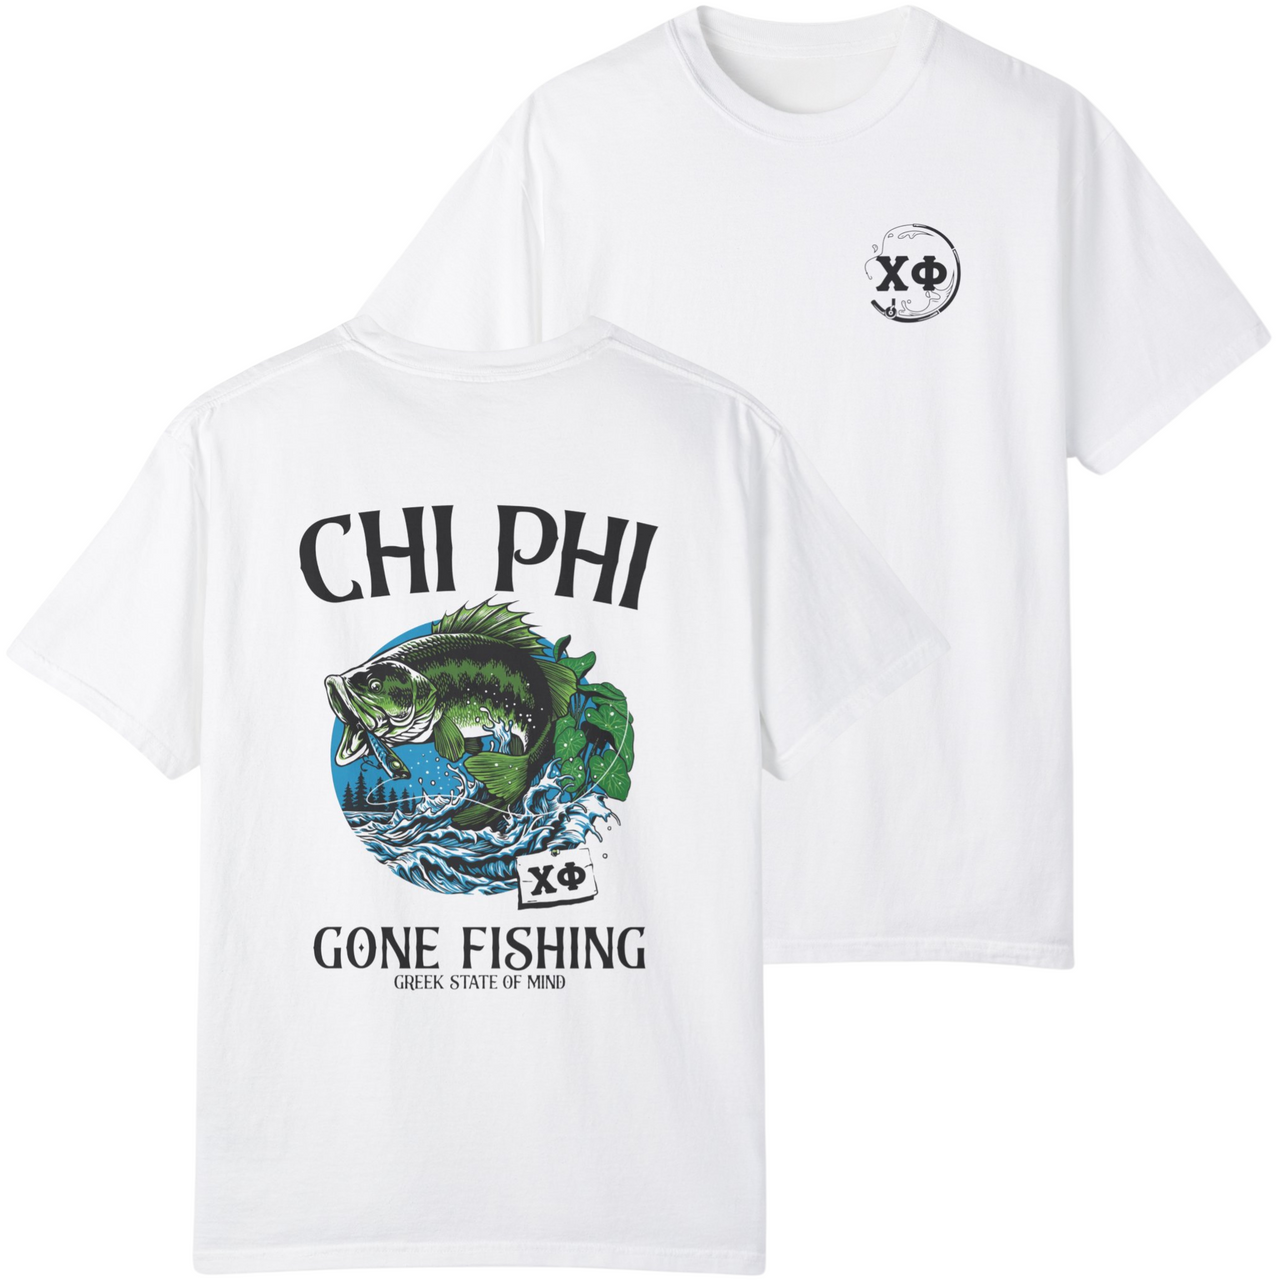 Chi Phi Graphic T-Shirt | Gone Fishing